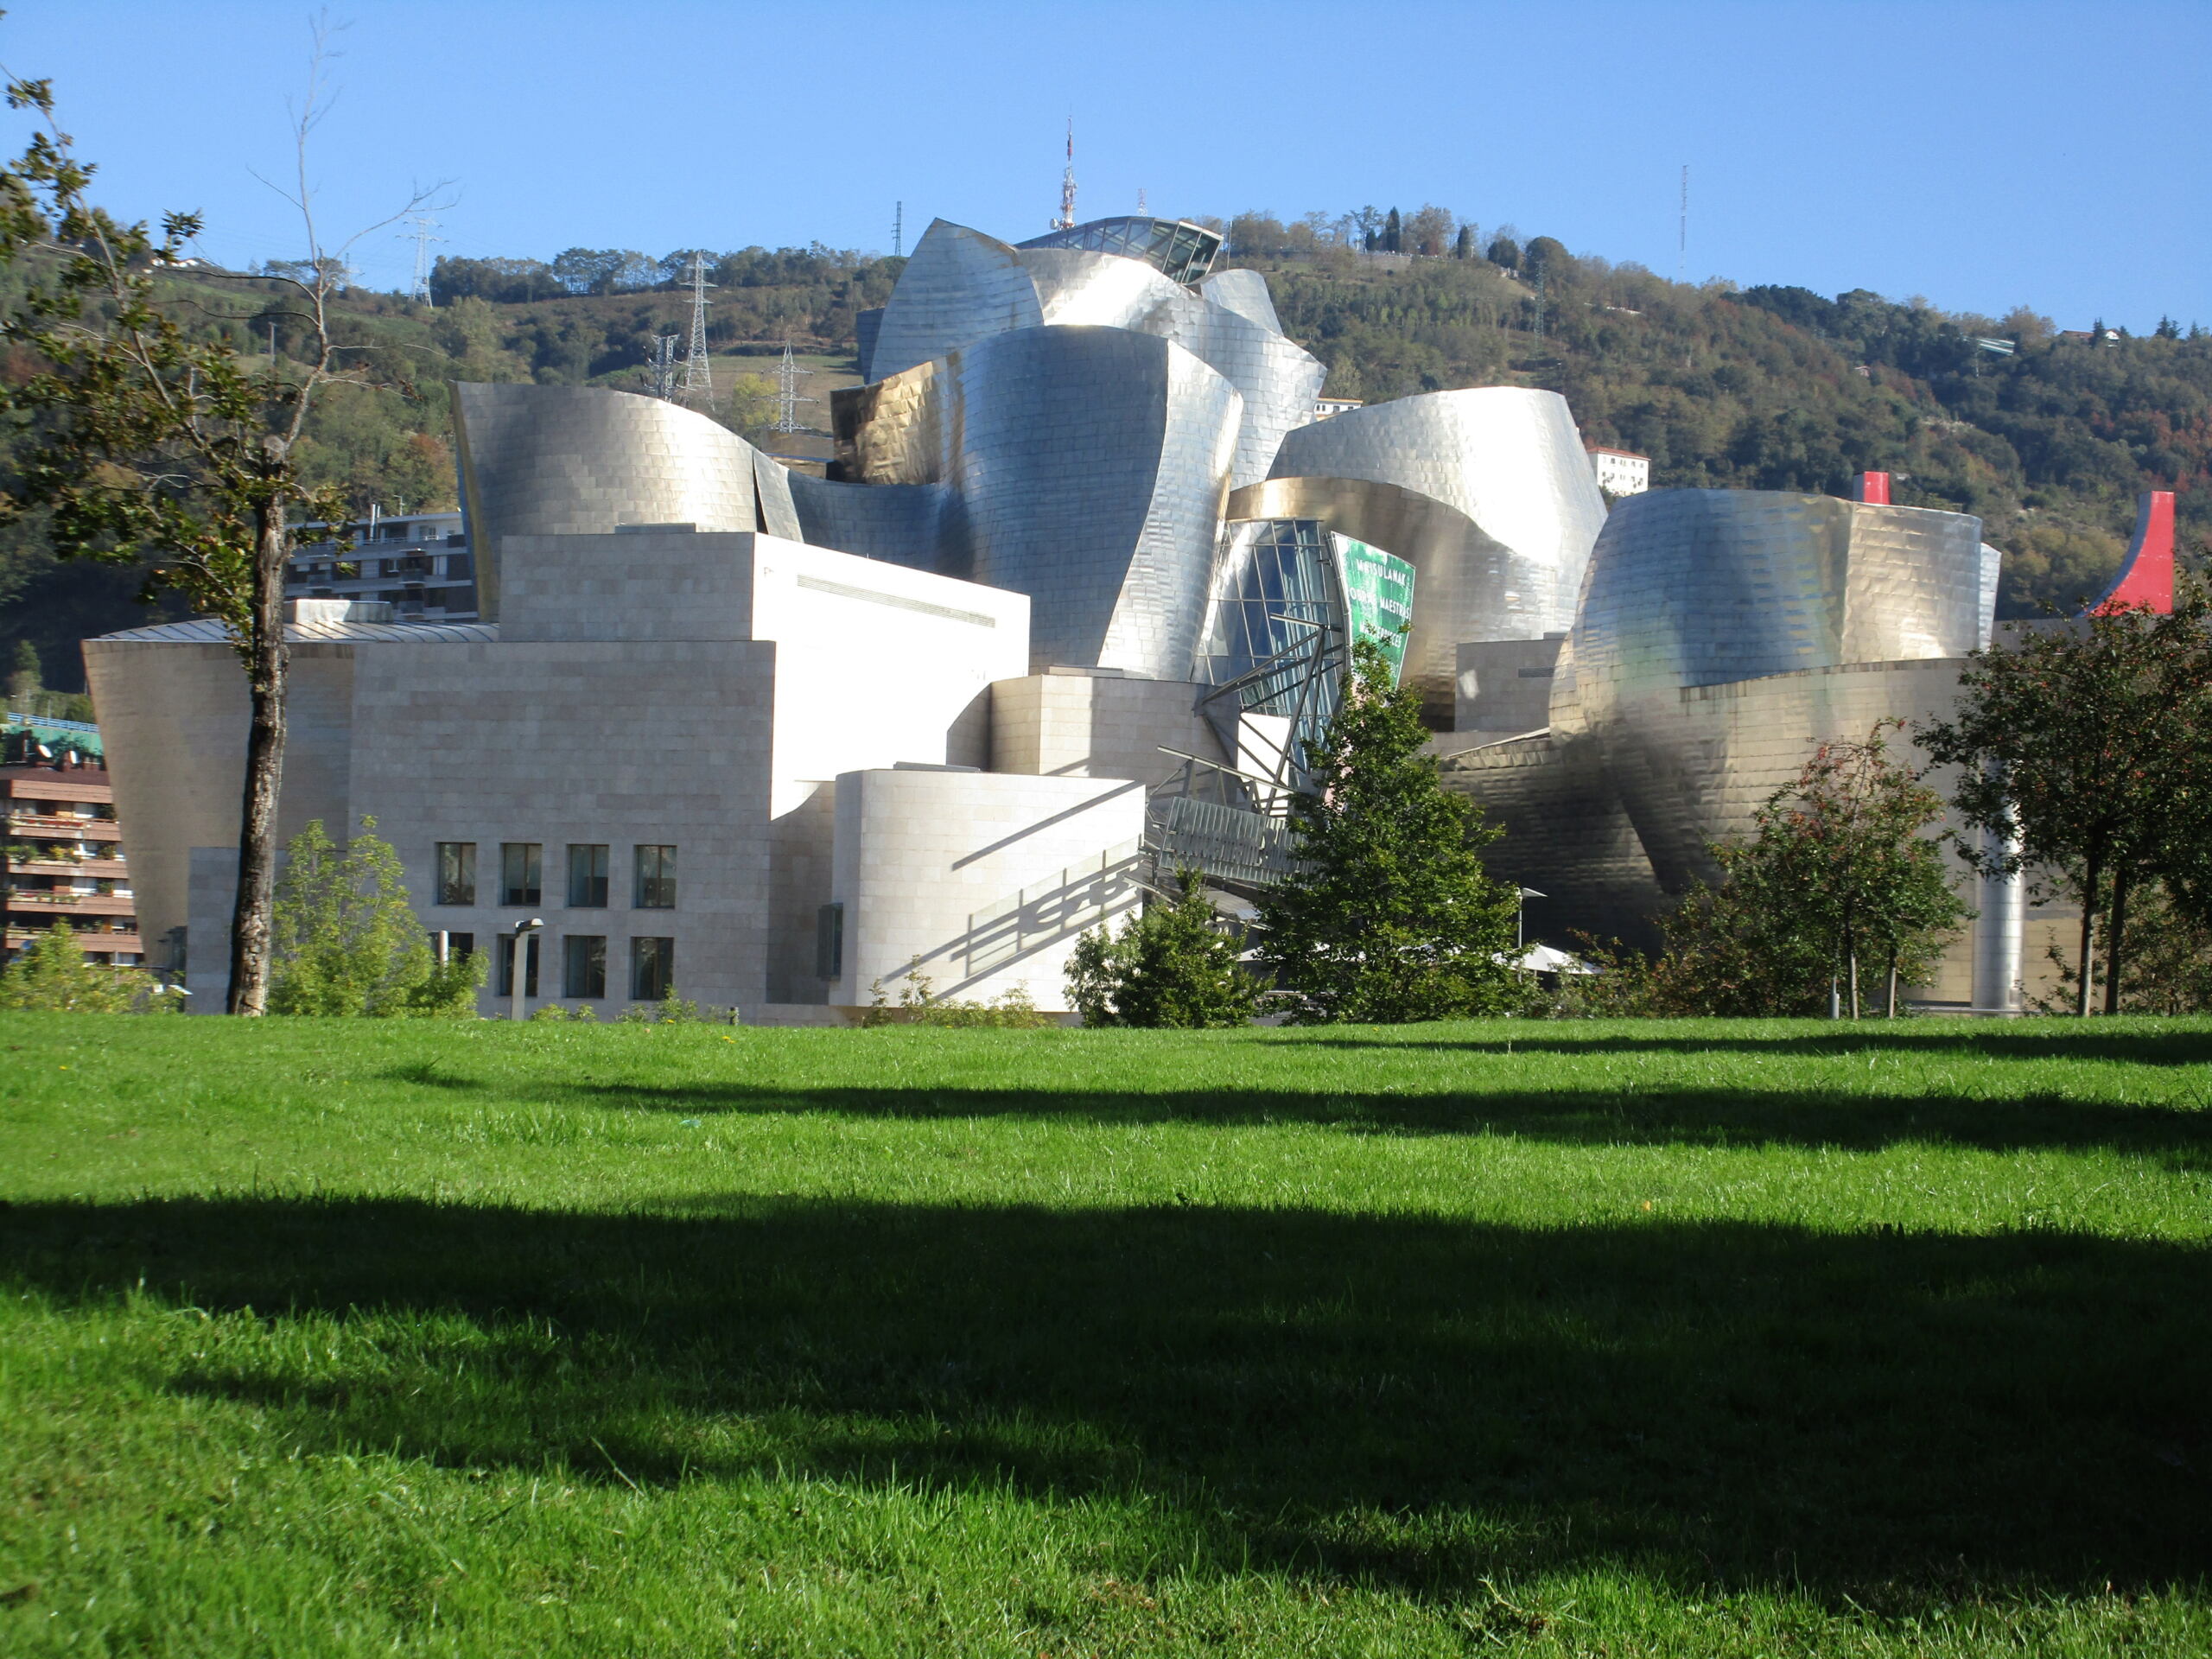 bilbao - Musée Guggenheim à Bilbao, Espagne - Page 2 20161020